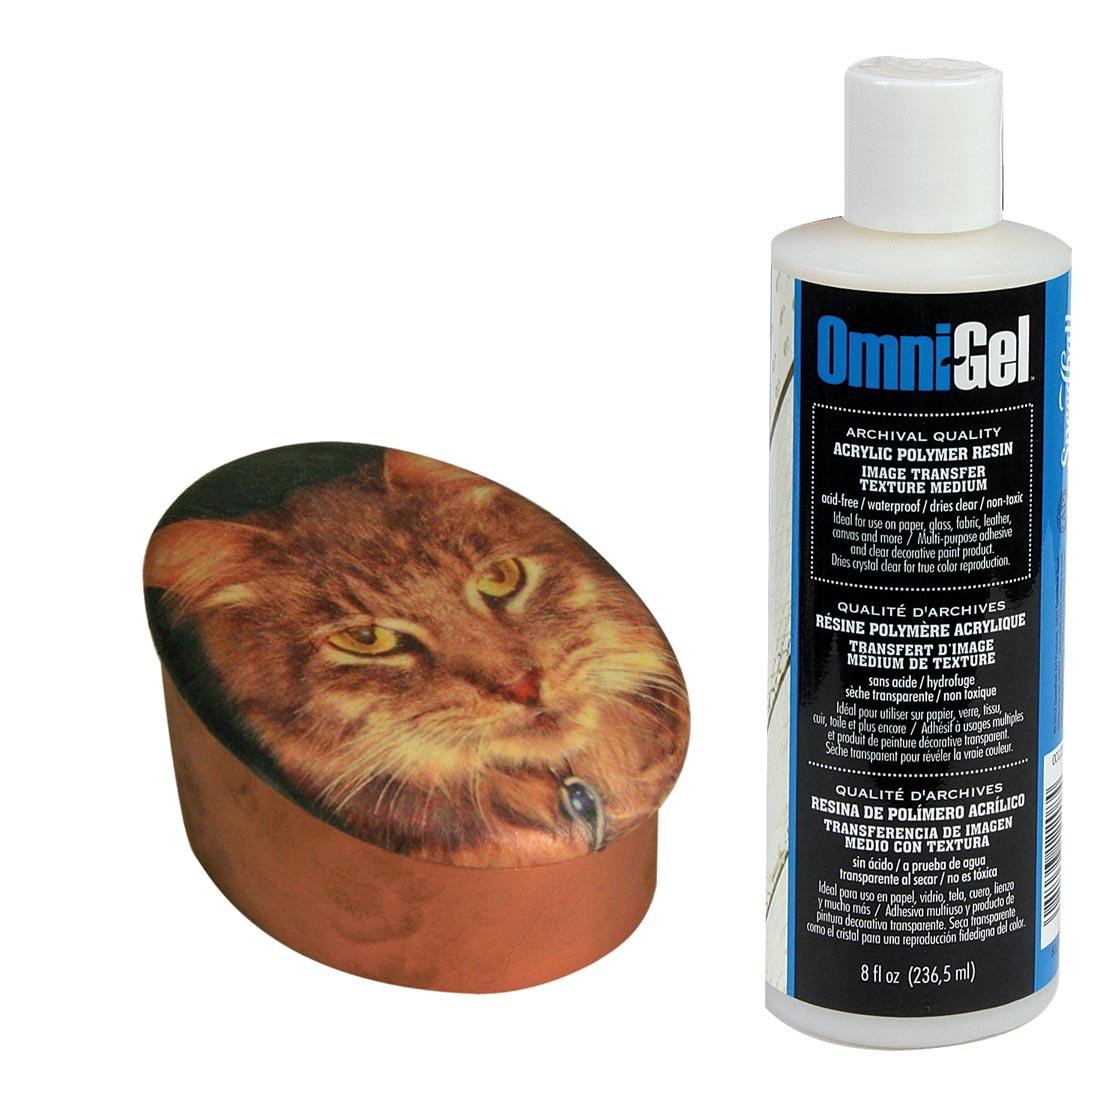 bottle of Omni-Gel Transfer Medium beside a cat-face project that used it